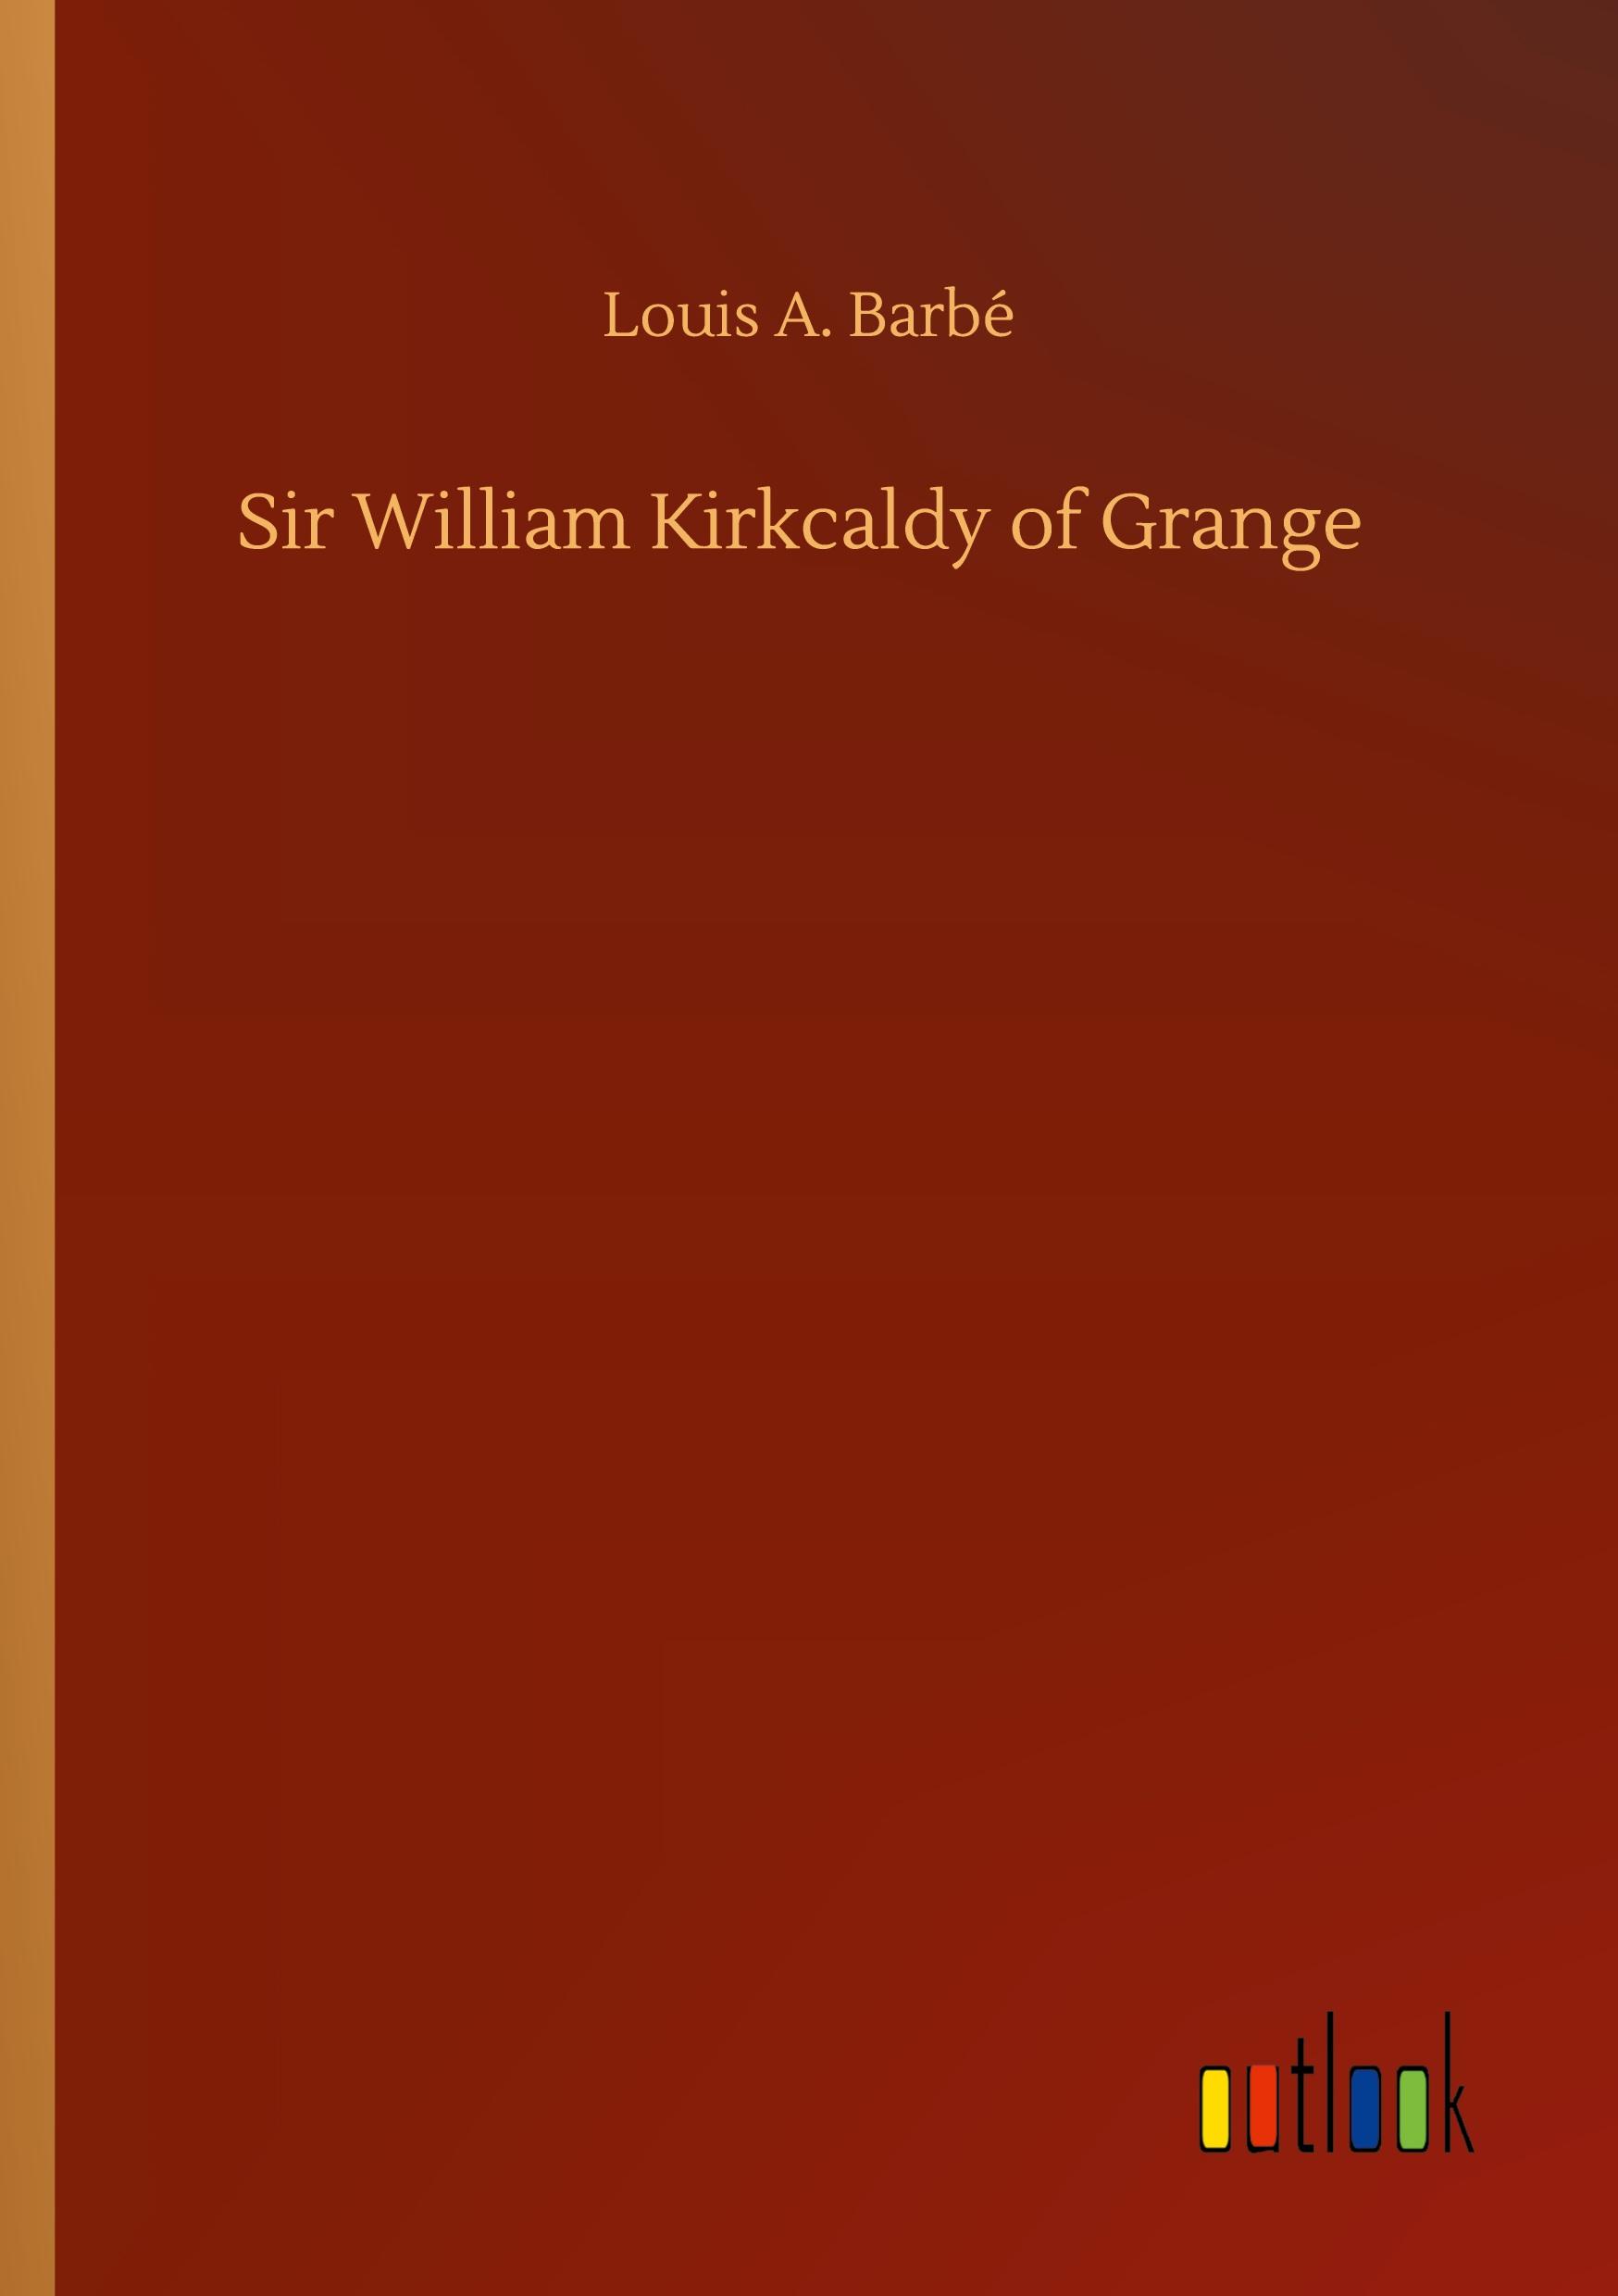 Sir William Kirkcaldy of Grange